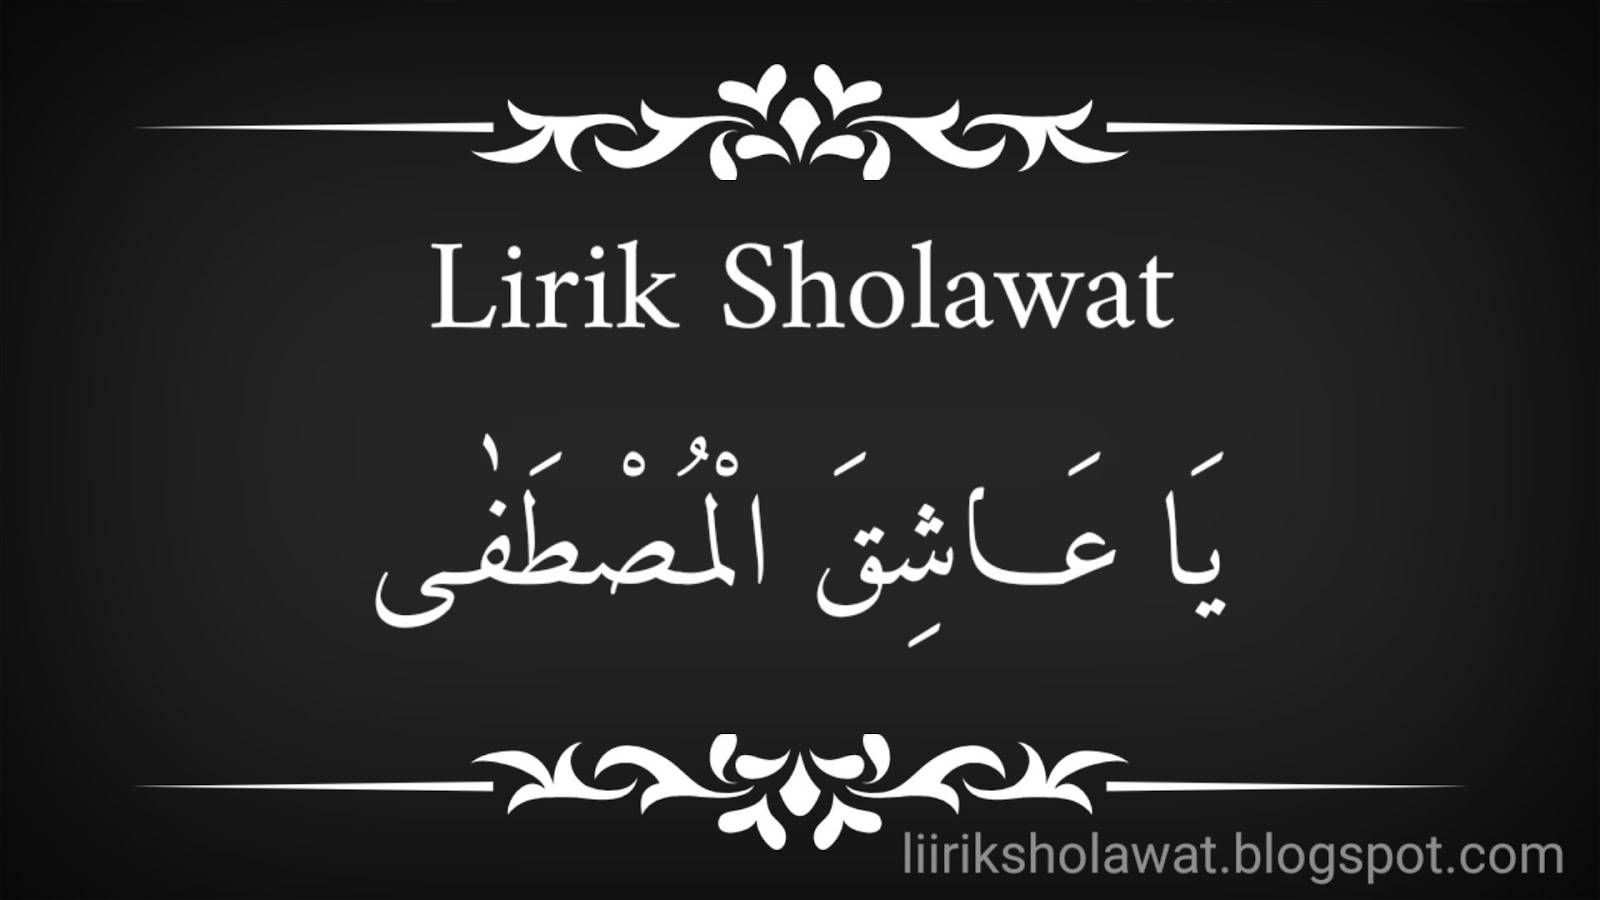 Lirik Sholawat Yaa 'Asyiqol Musthofa teks Arab dan Latin